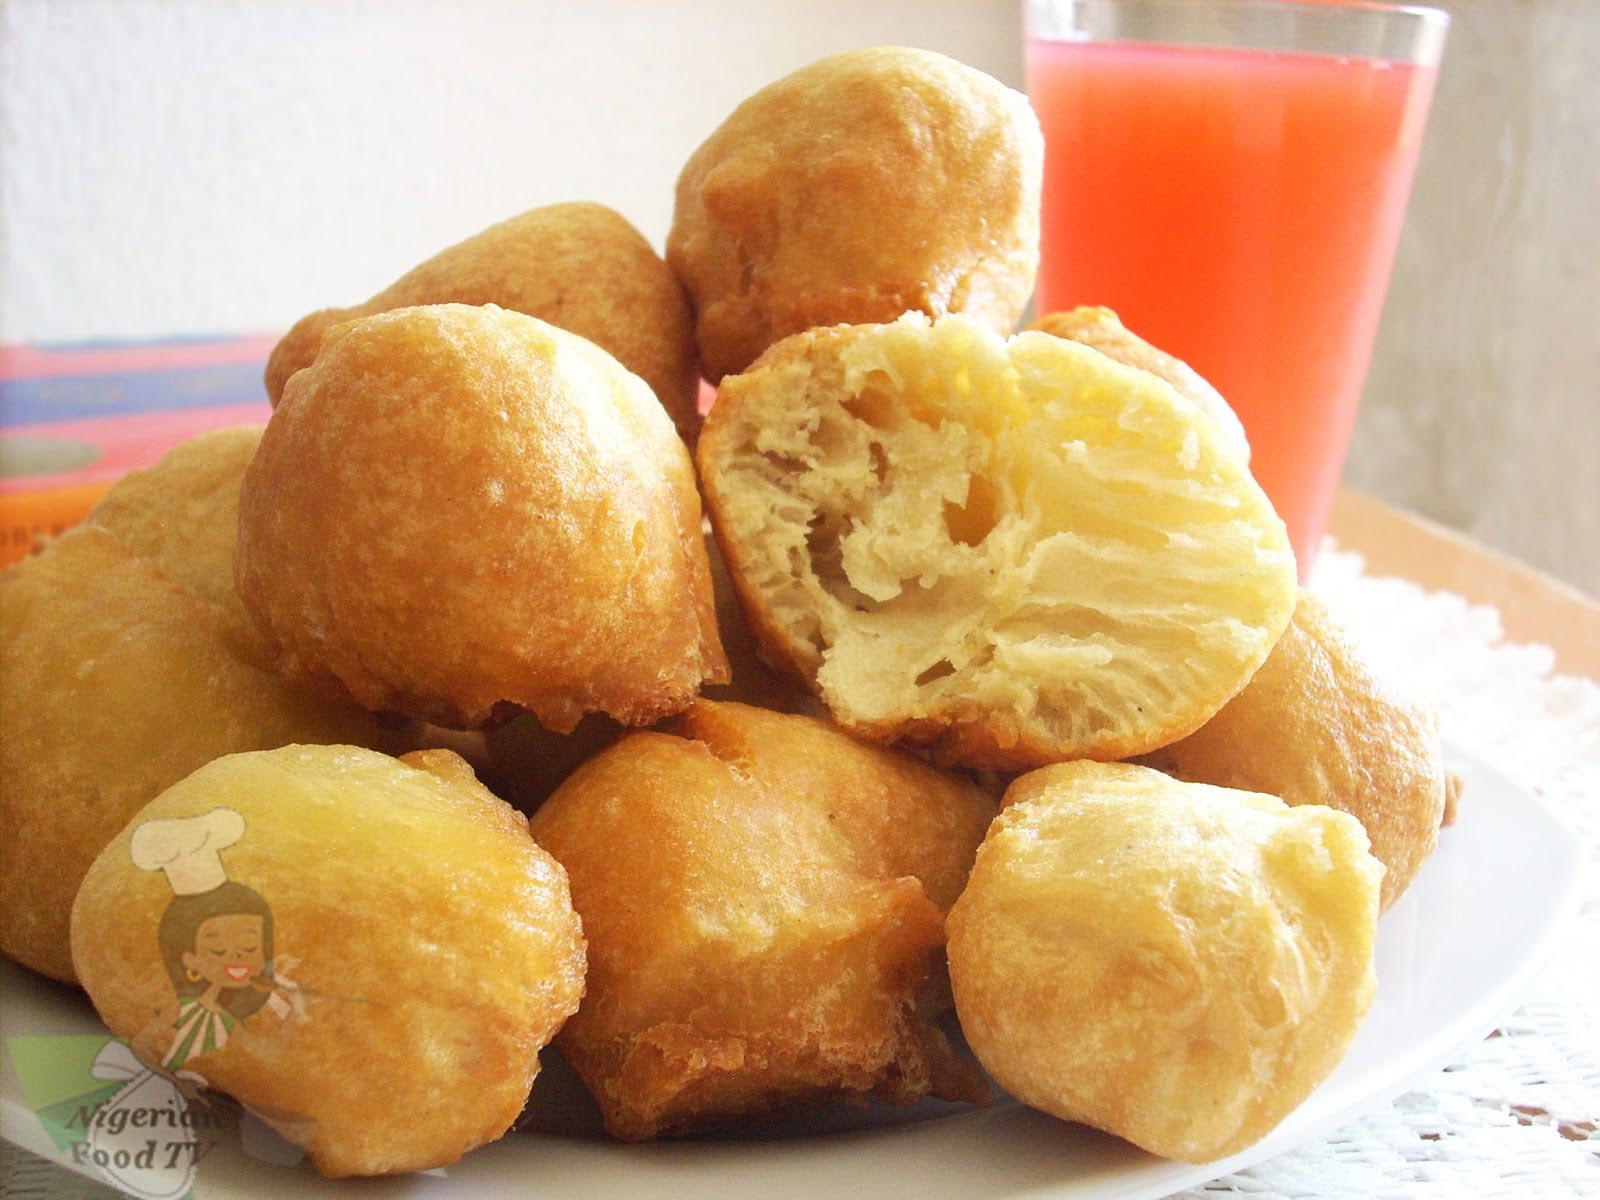 nigerian-buns-2-NigerianFoodTv